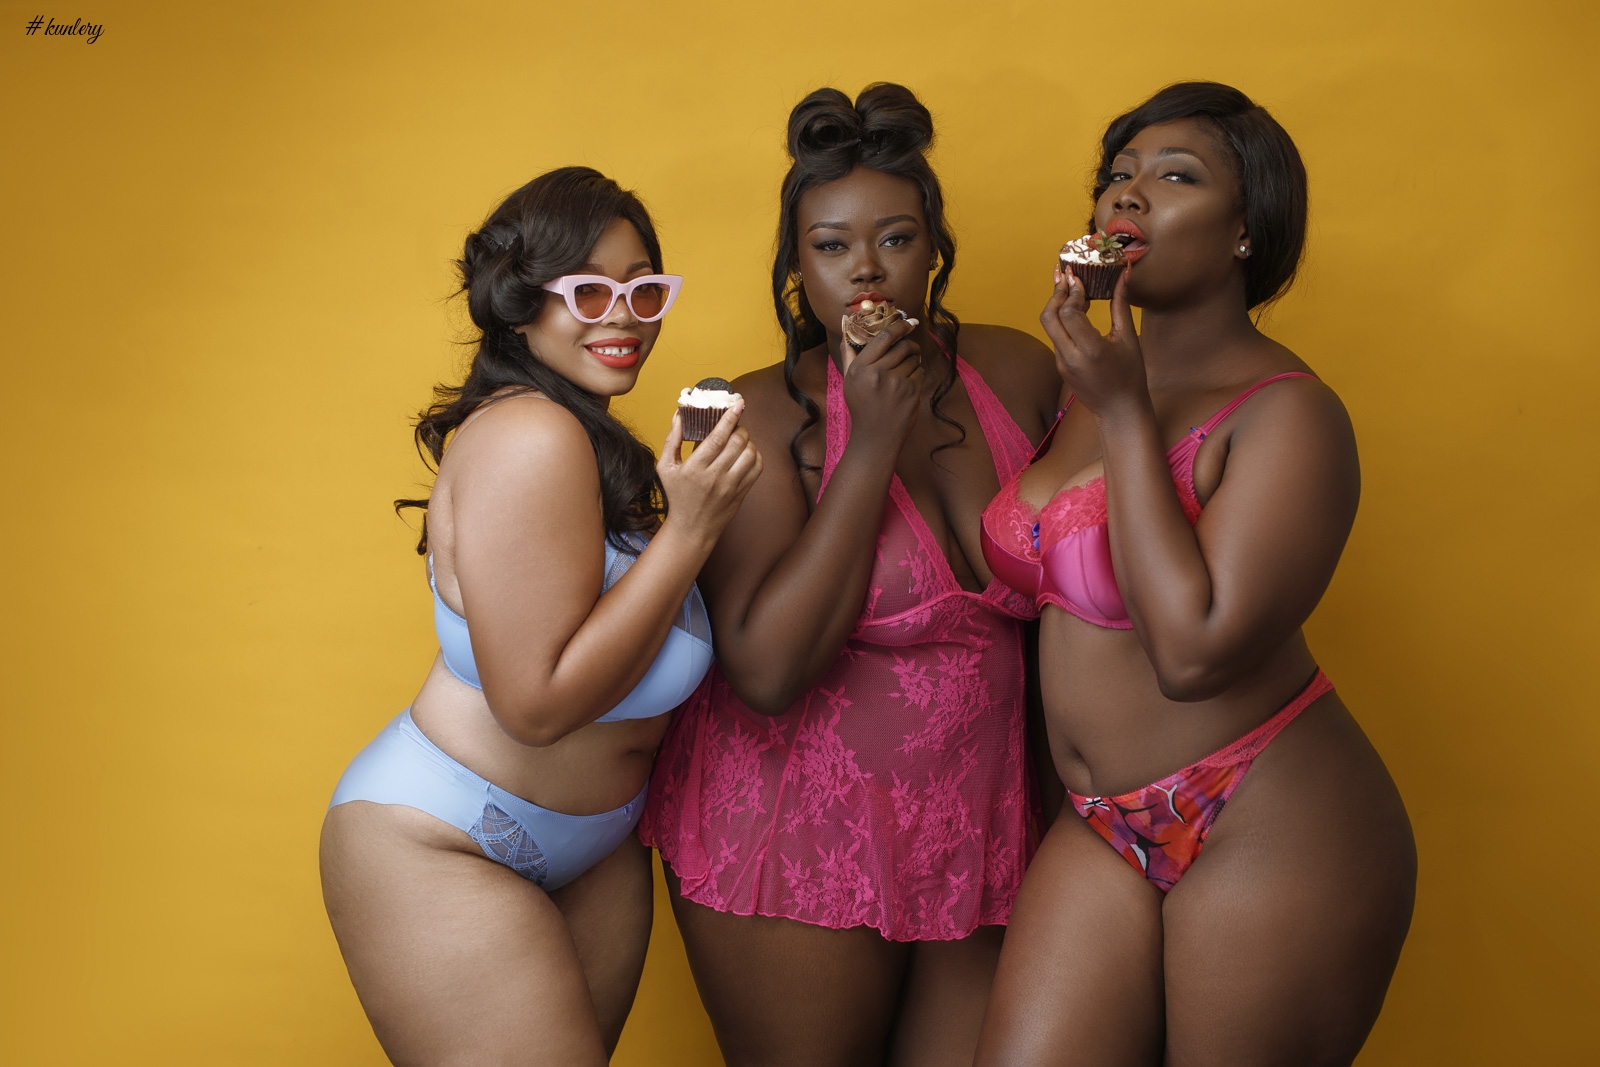 Media Personality, Tolu ‘Toolz’ Oniru-Demuren Launches Lingerie Line, “Sablier” For The Plus Size Women